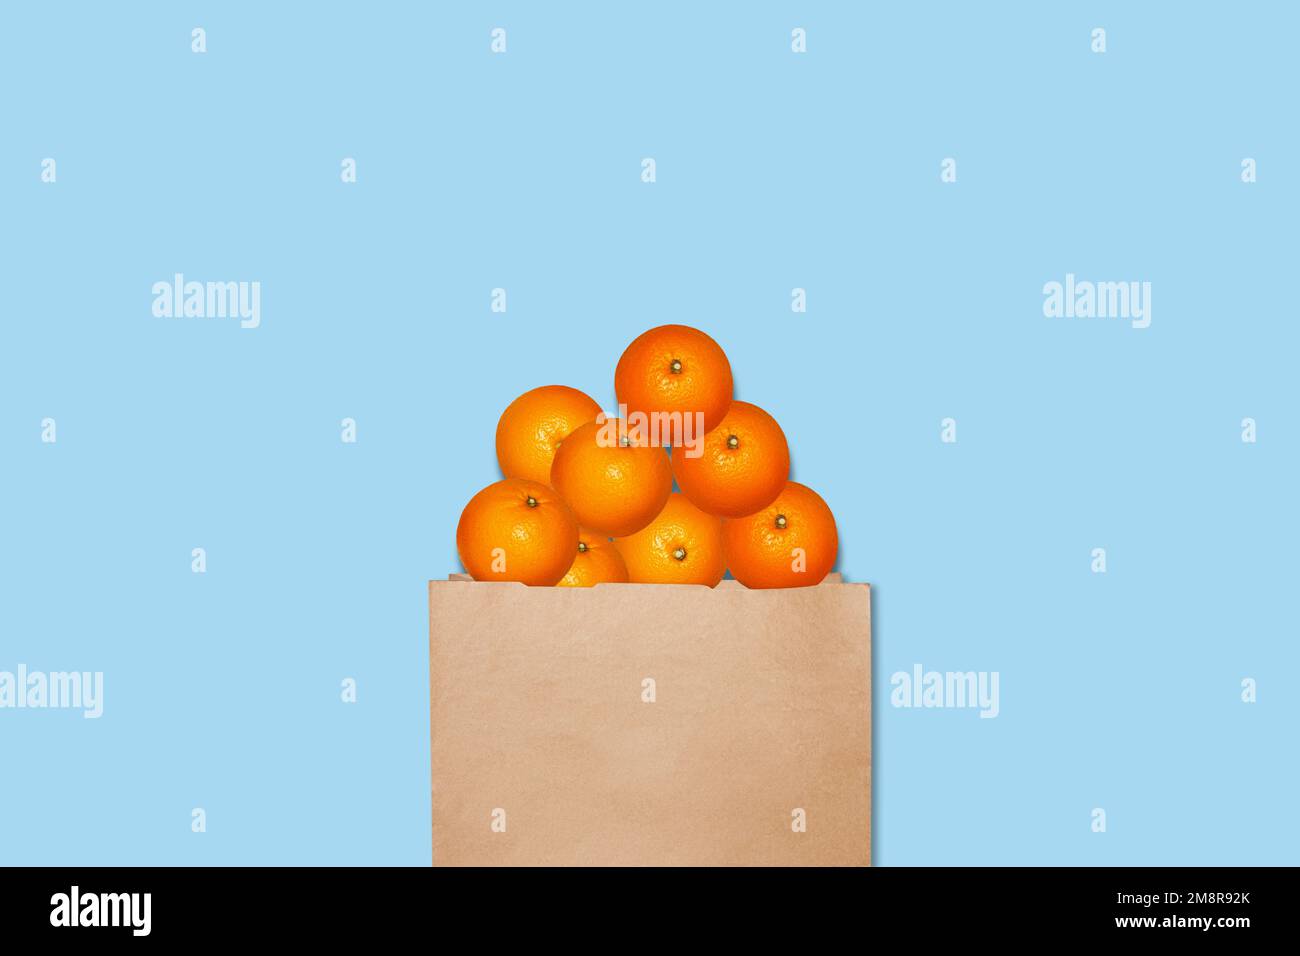 https://c8.alamy.com/comp/2M8R92K/oranges-in-a-paper-bag-on-a-blue-background-2M8R92K.jpg